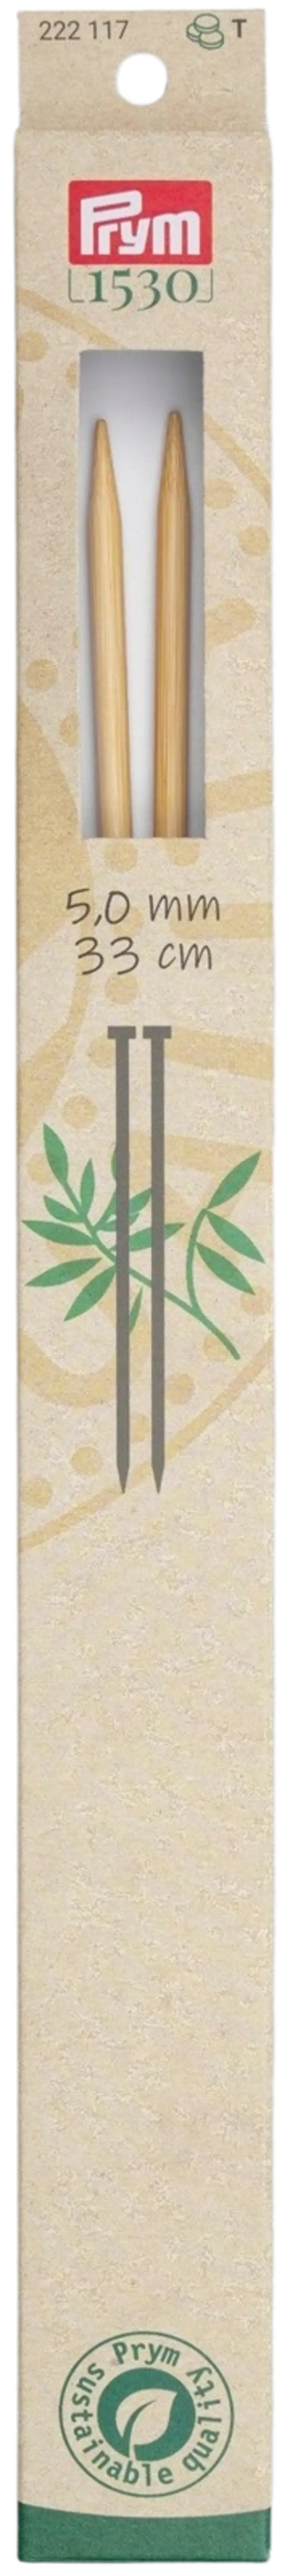 Prym 1530 neulepuikko 5,0 33cm bambua | Prisma verkkokauppa